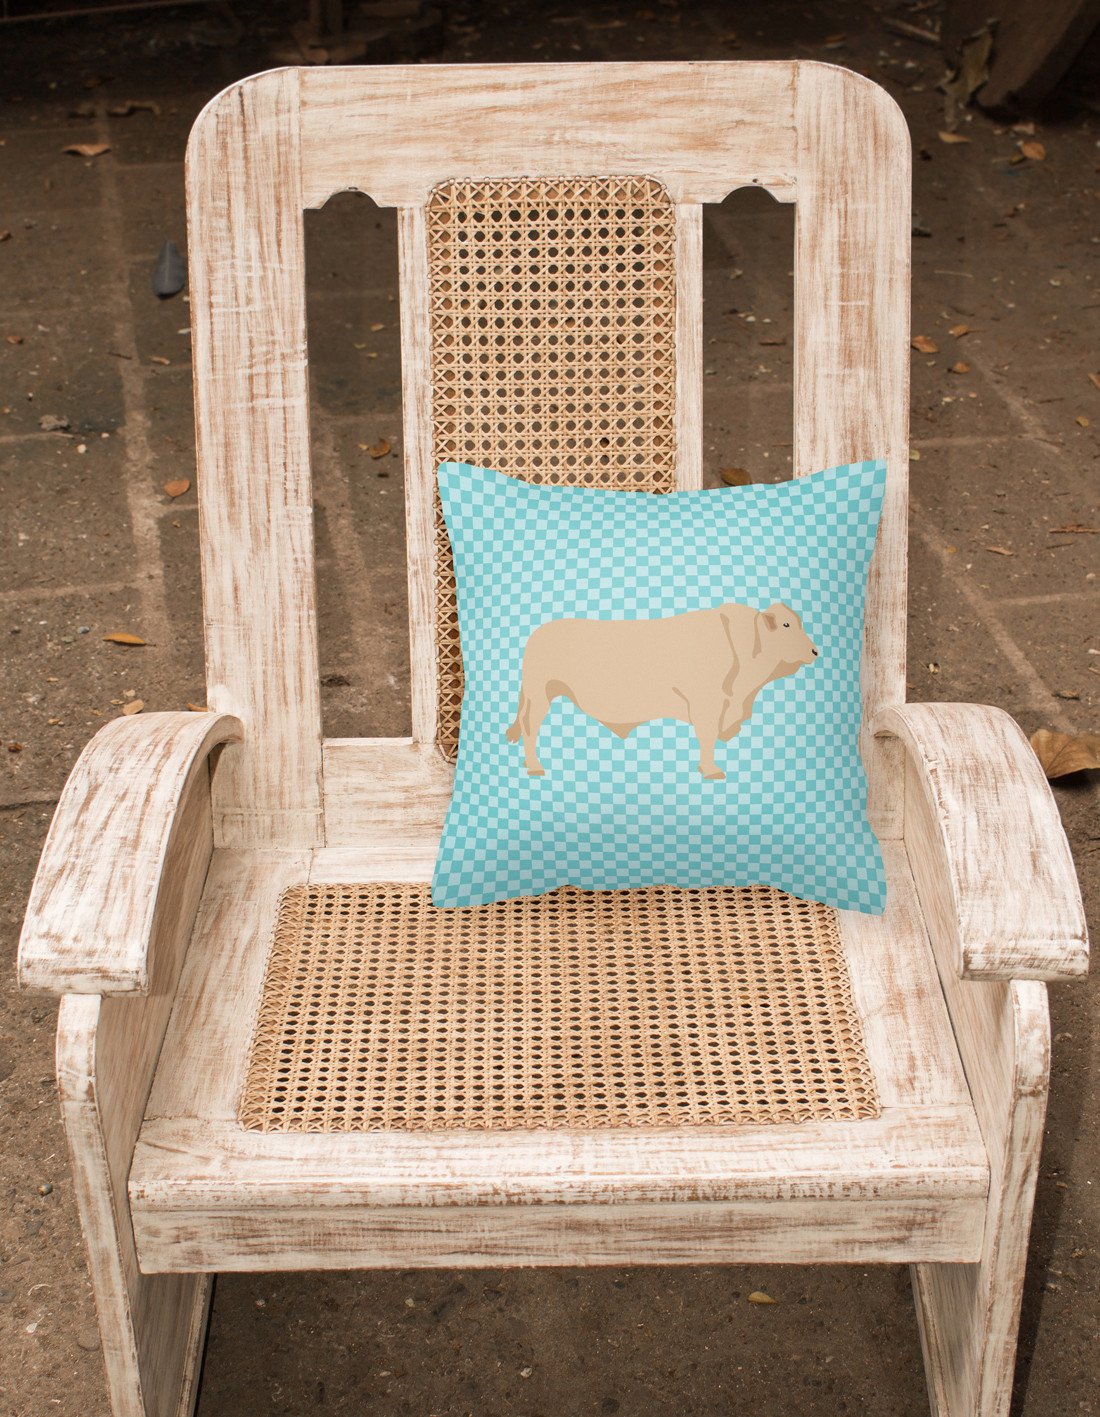 Charolais Cow Blue Check Fabric Decorative Pillow BB8000PW1818 by Caroline's Treasures